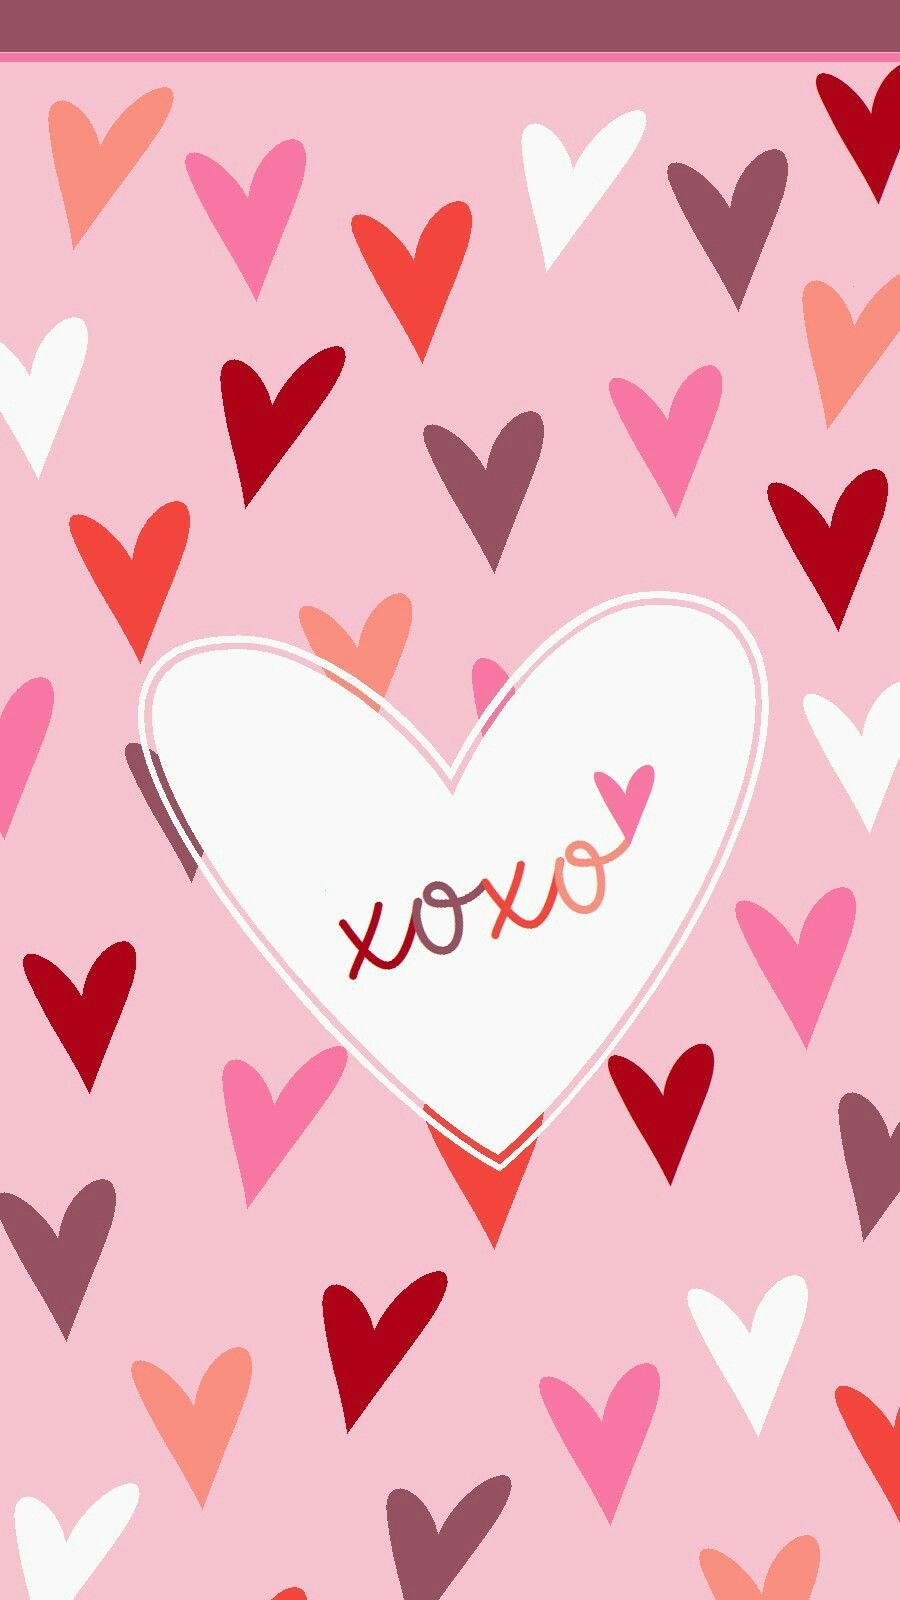 Lovenote5. Valentines day wallpaper phone wallpaper, Valentine day wallpaper hd, Heart iphone wallpaper